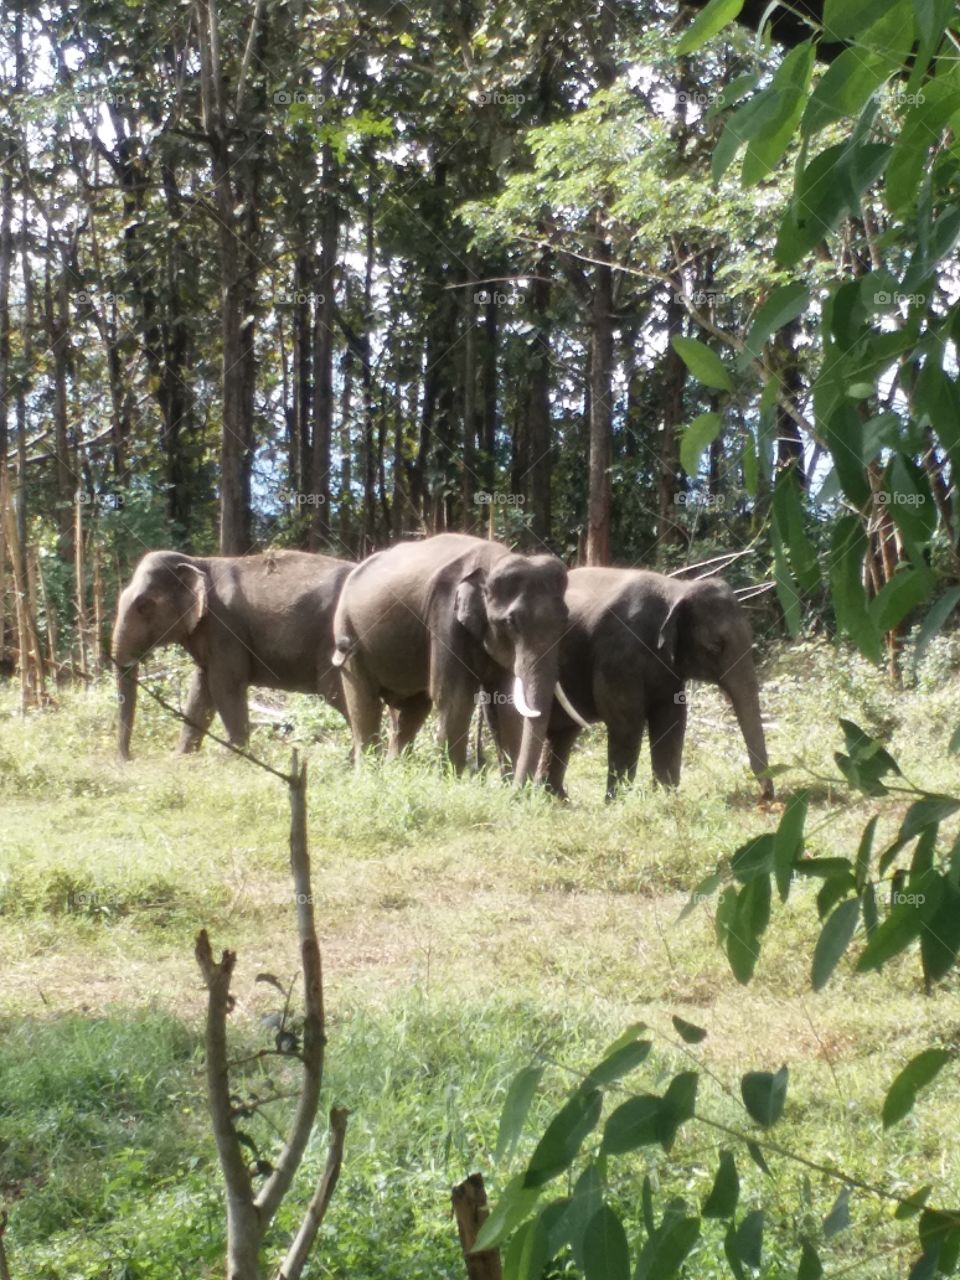 elephants roaming